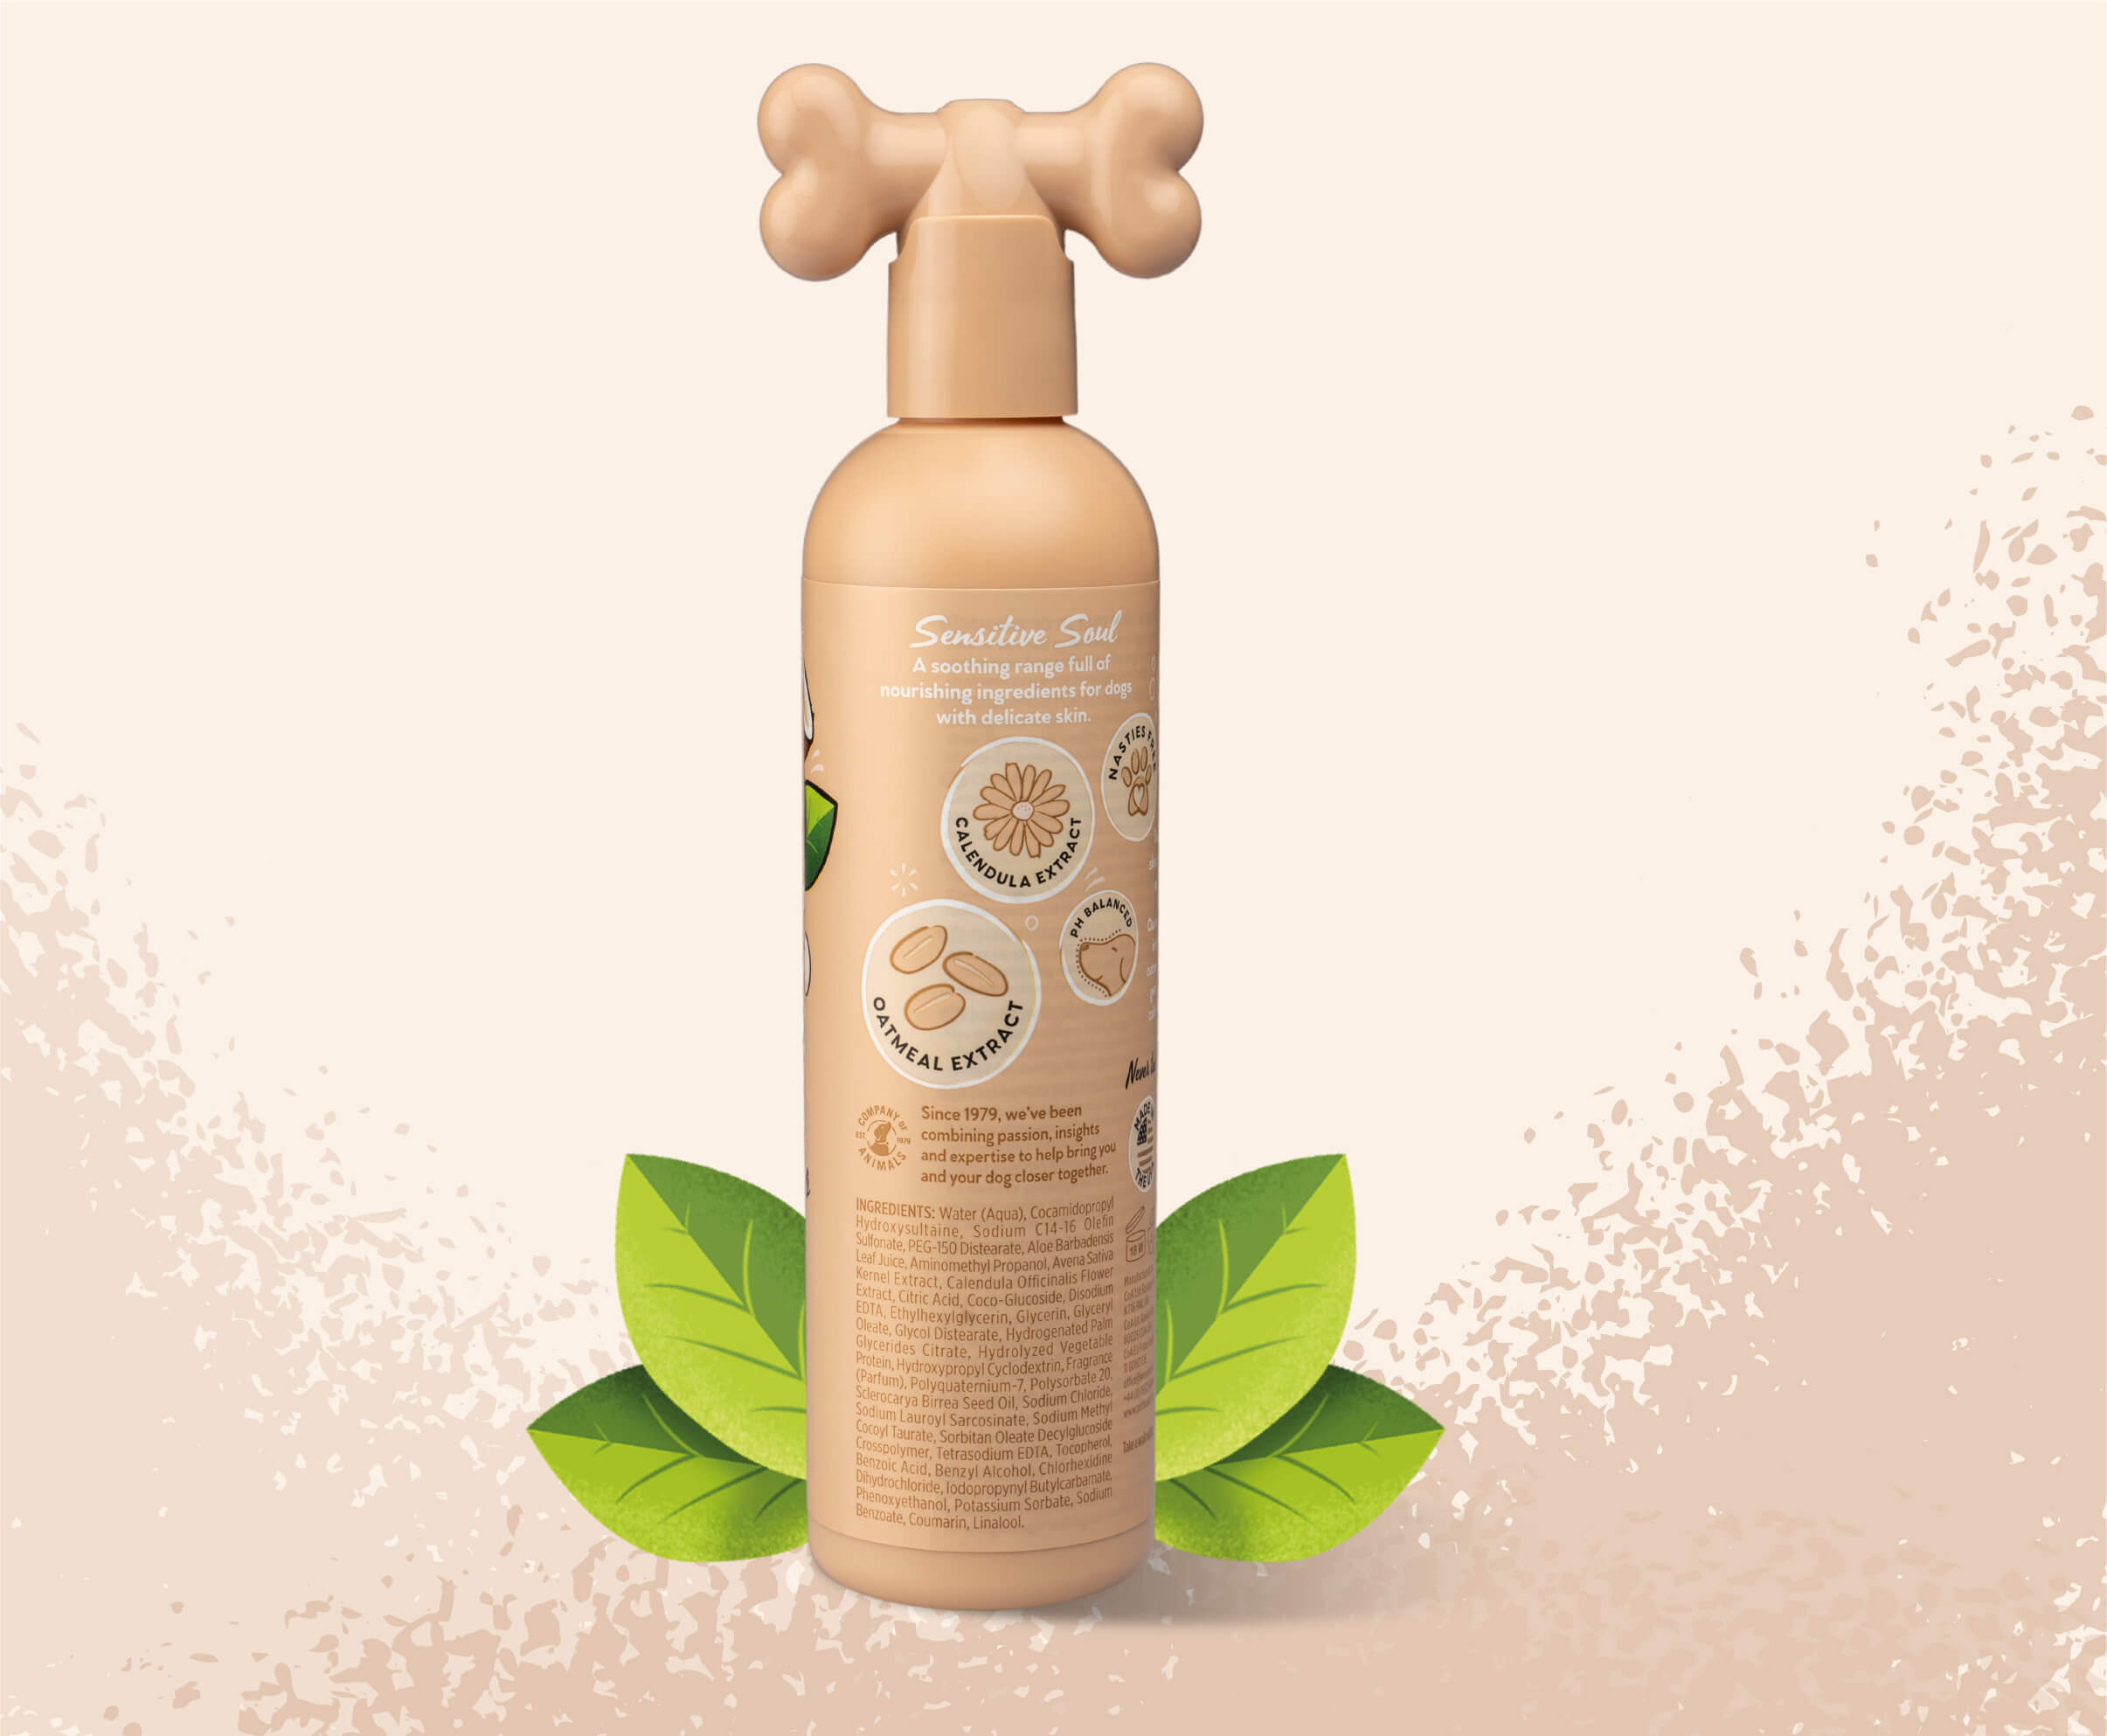 Product shot of the back of the Pet Head Sensitive Soul shampoo